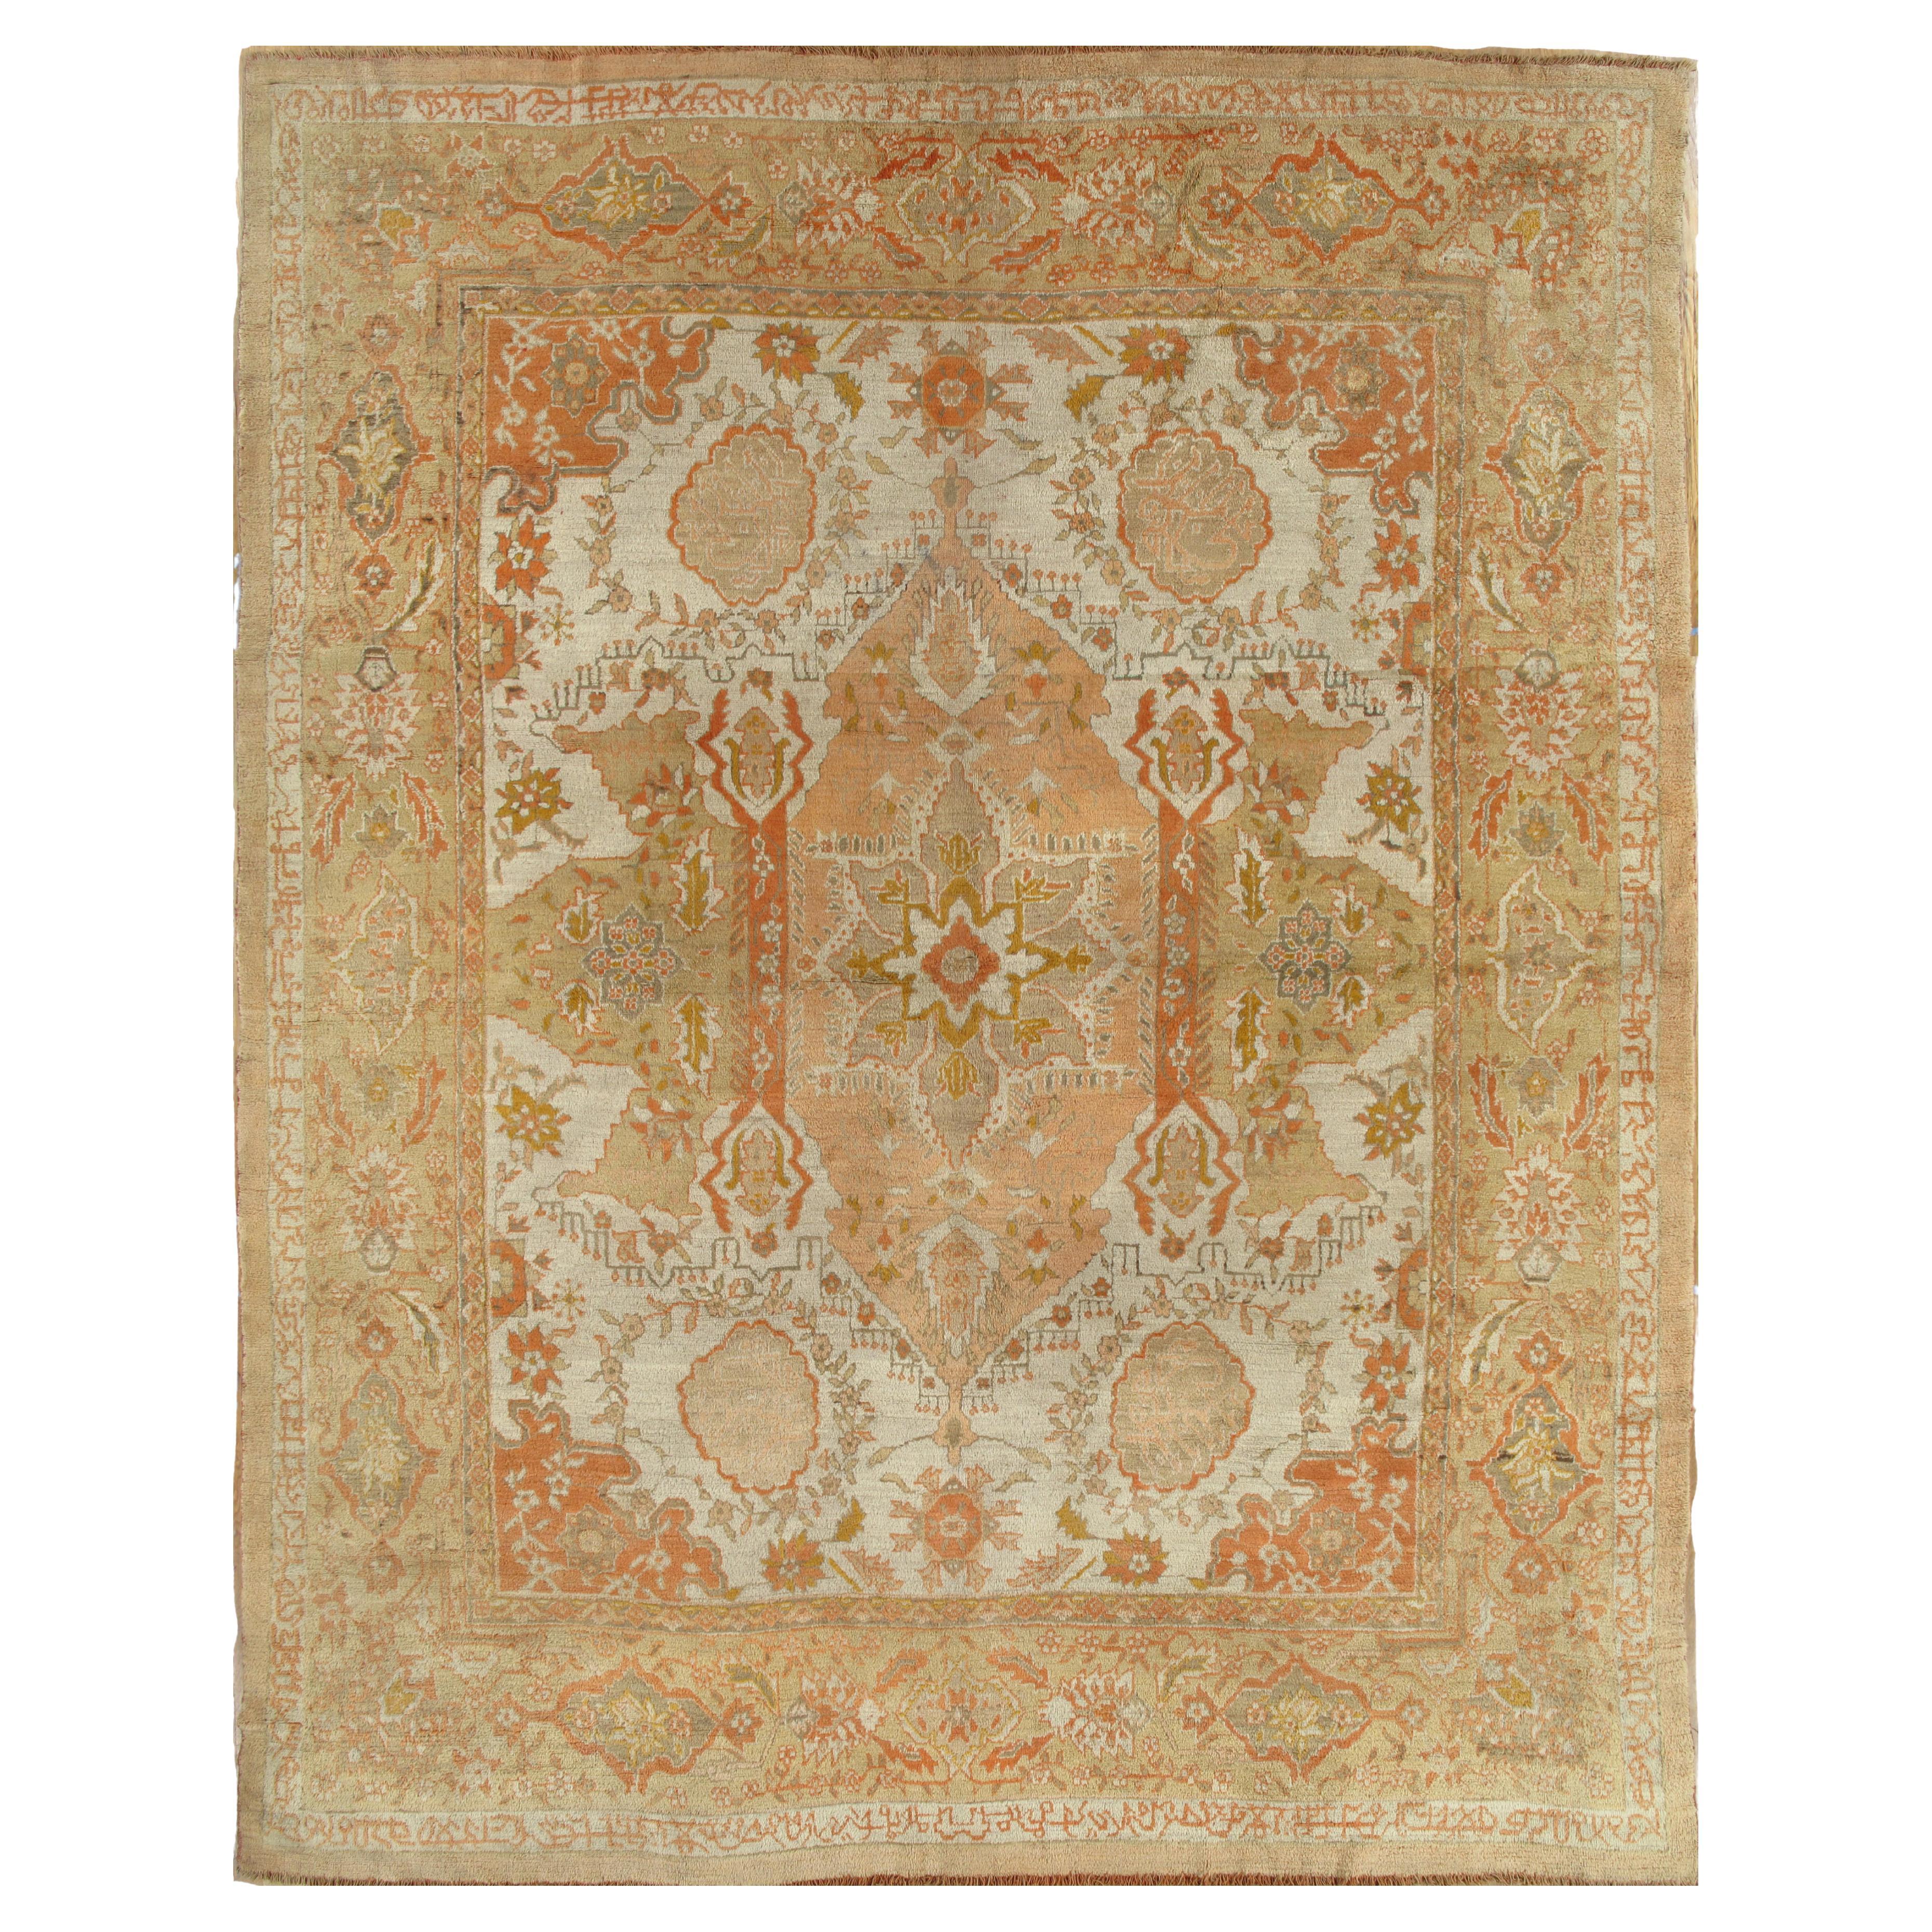 Antique Oushak Carpet, Handmade Oriental Rug, Ivory Field, Coral, Gray, Soft 